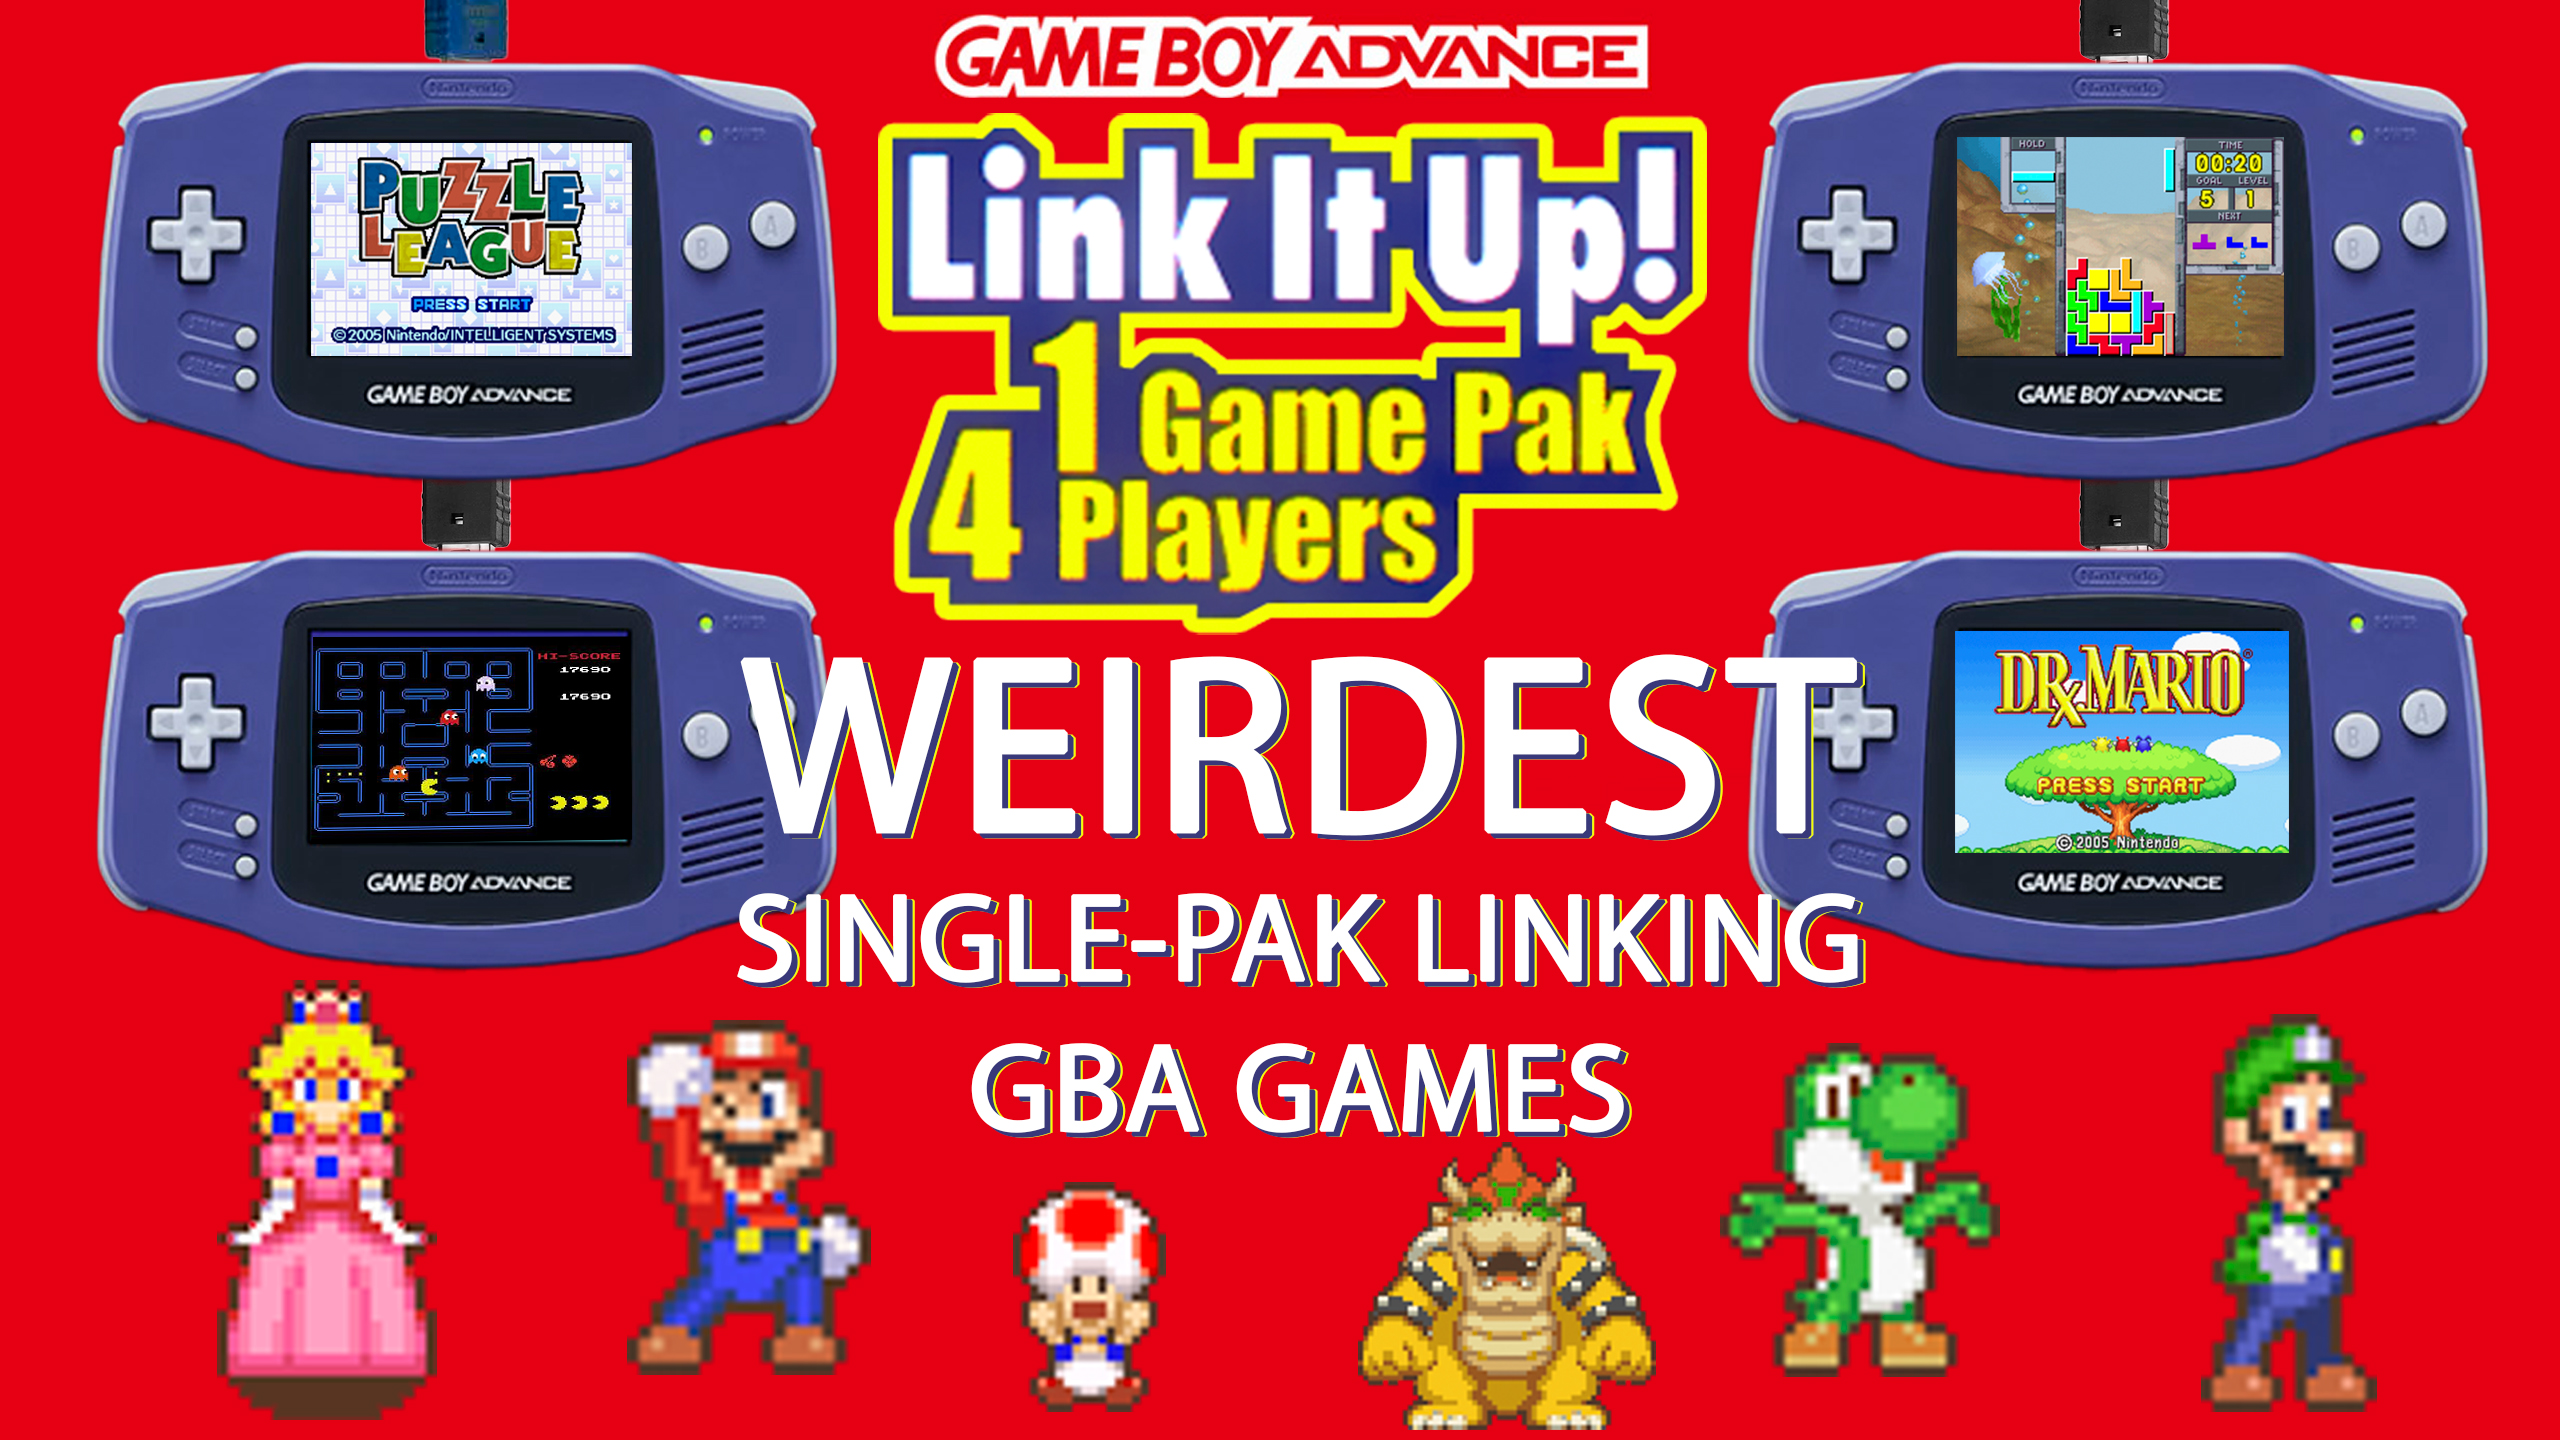 The 10 WEIRDEST Gameboy Advance Single-Pak linking games